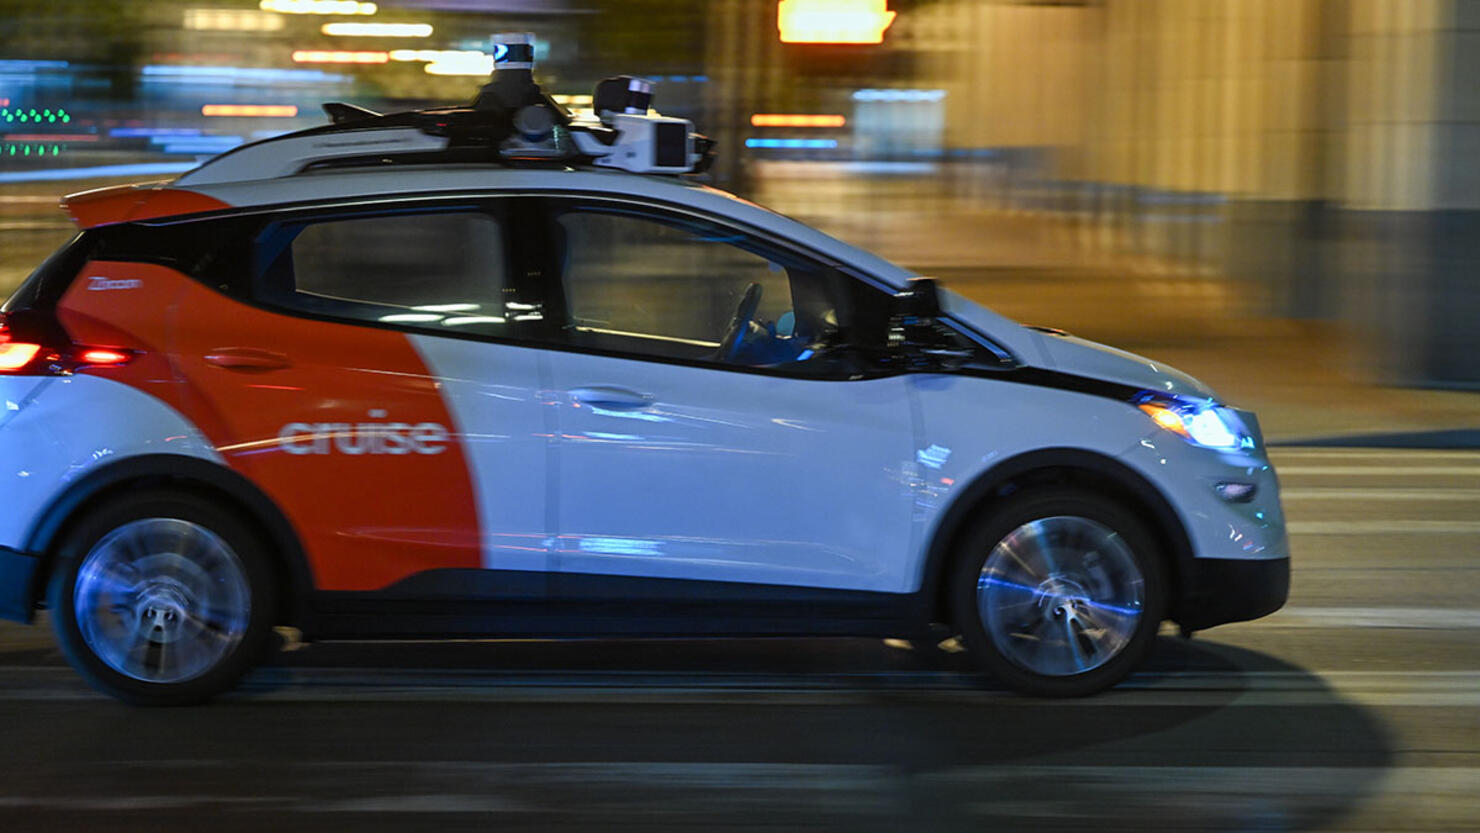 Cruise: A driverless robot taxi in San Francisco